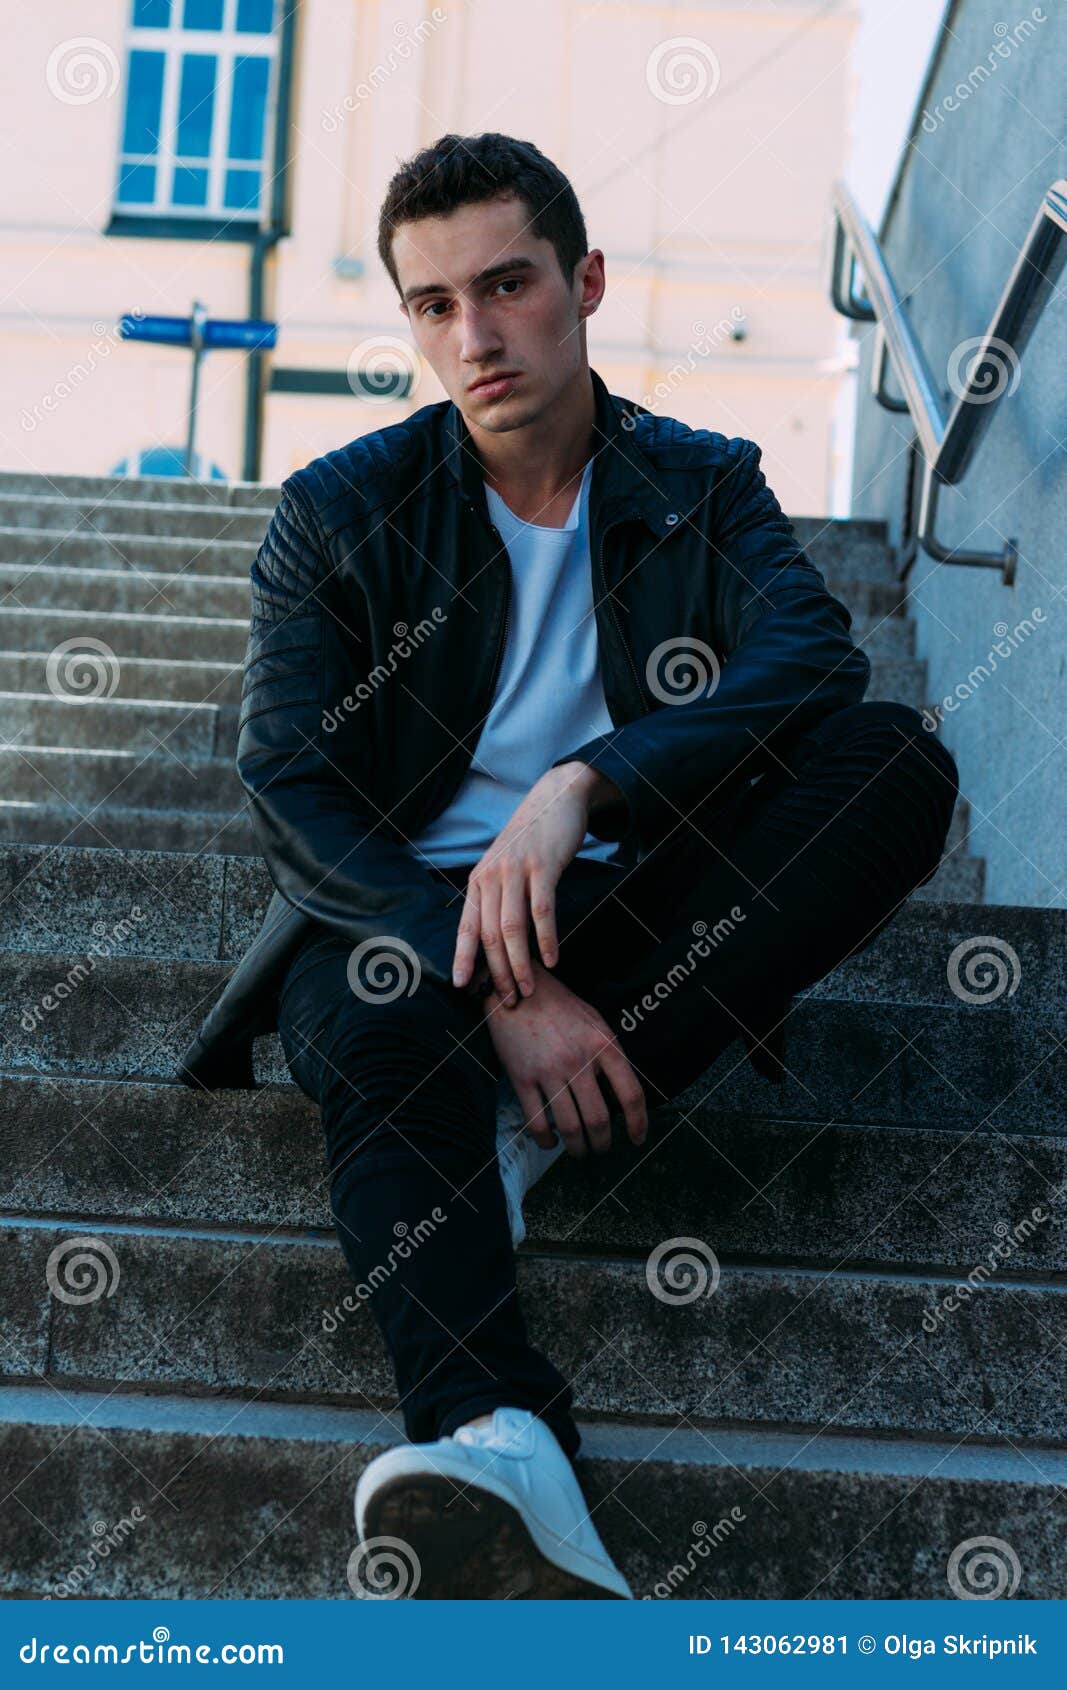 Asian Man Posing Outdoors Fashion Style Stock Photo 1461146183 |  Shutterstock